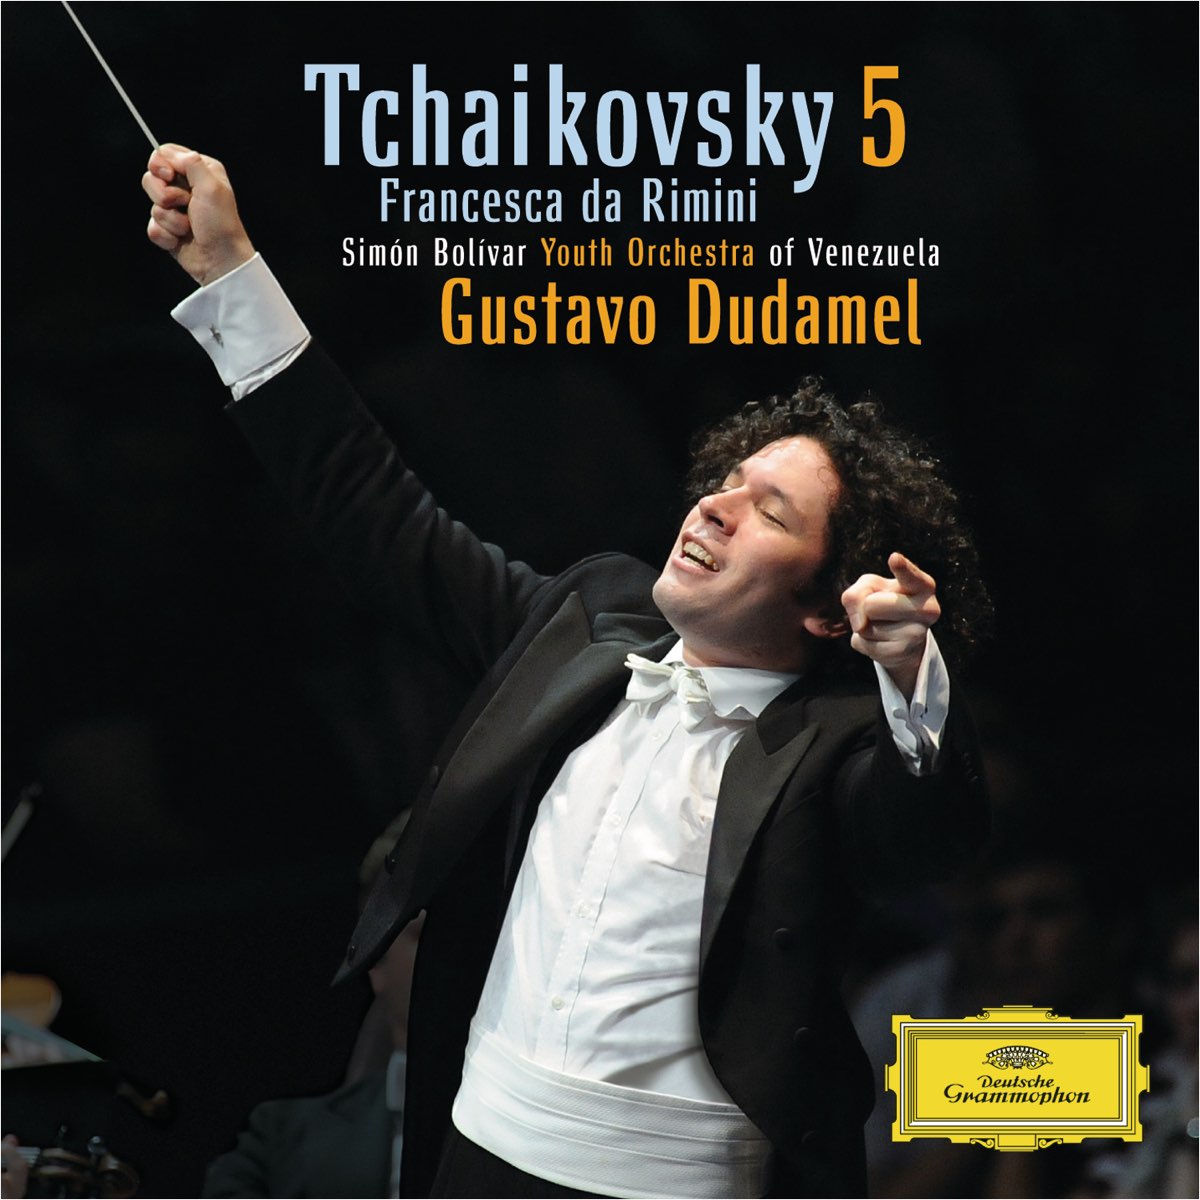 Tchaikovsky Symphony No 5 Francesca Da Rimini By Simon Bolivar Youth Orchestra Of Venezuela Gustavo Dudamel On Apple Music